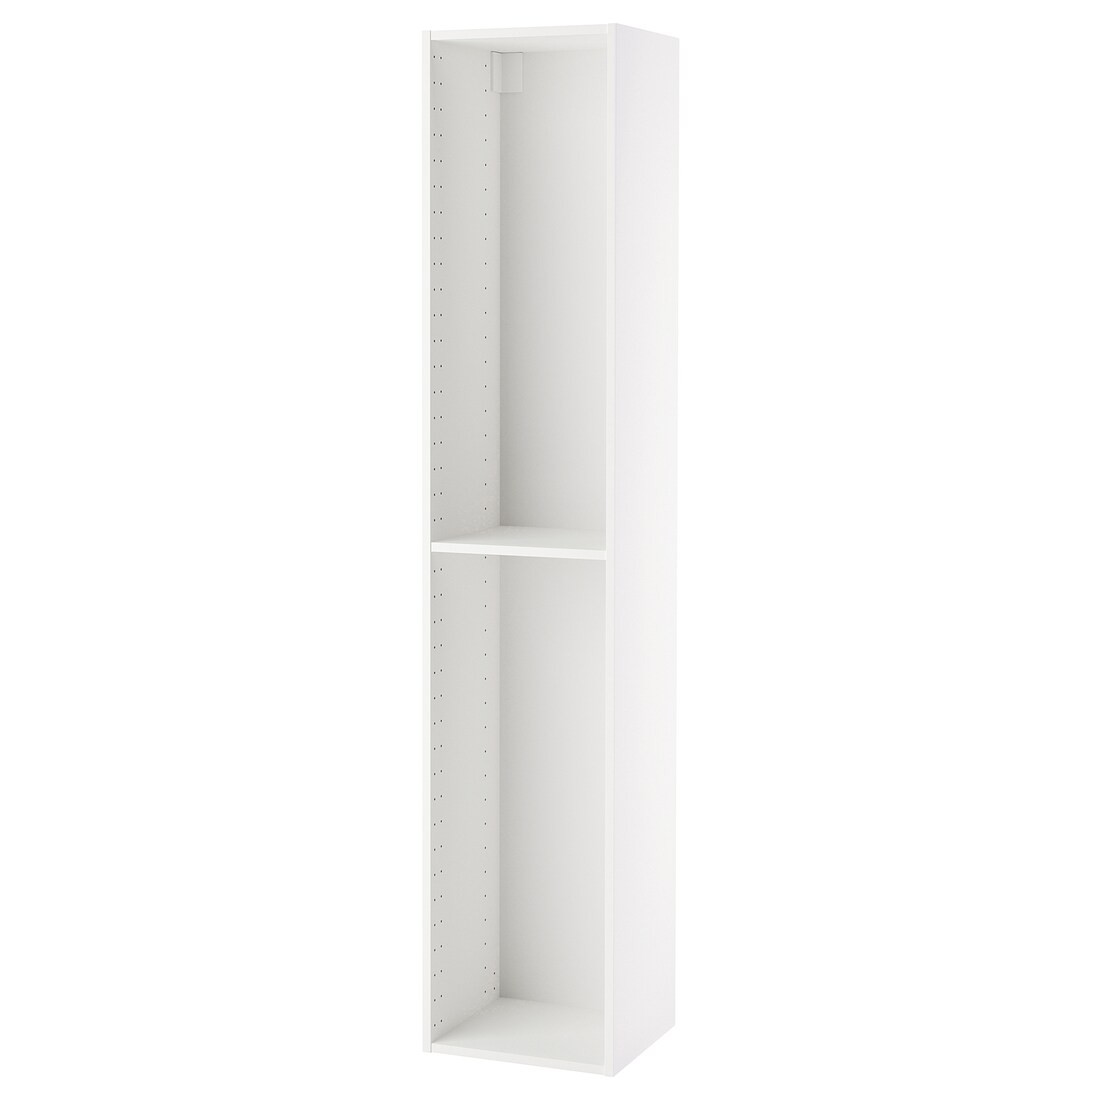 IKEA METOD МЕТОД Каркас високої шафи, білий, 40x37x200 см 10212563 102.125.63